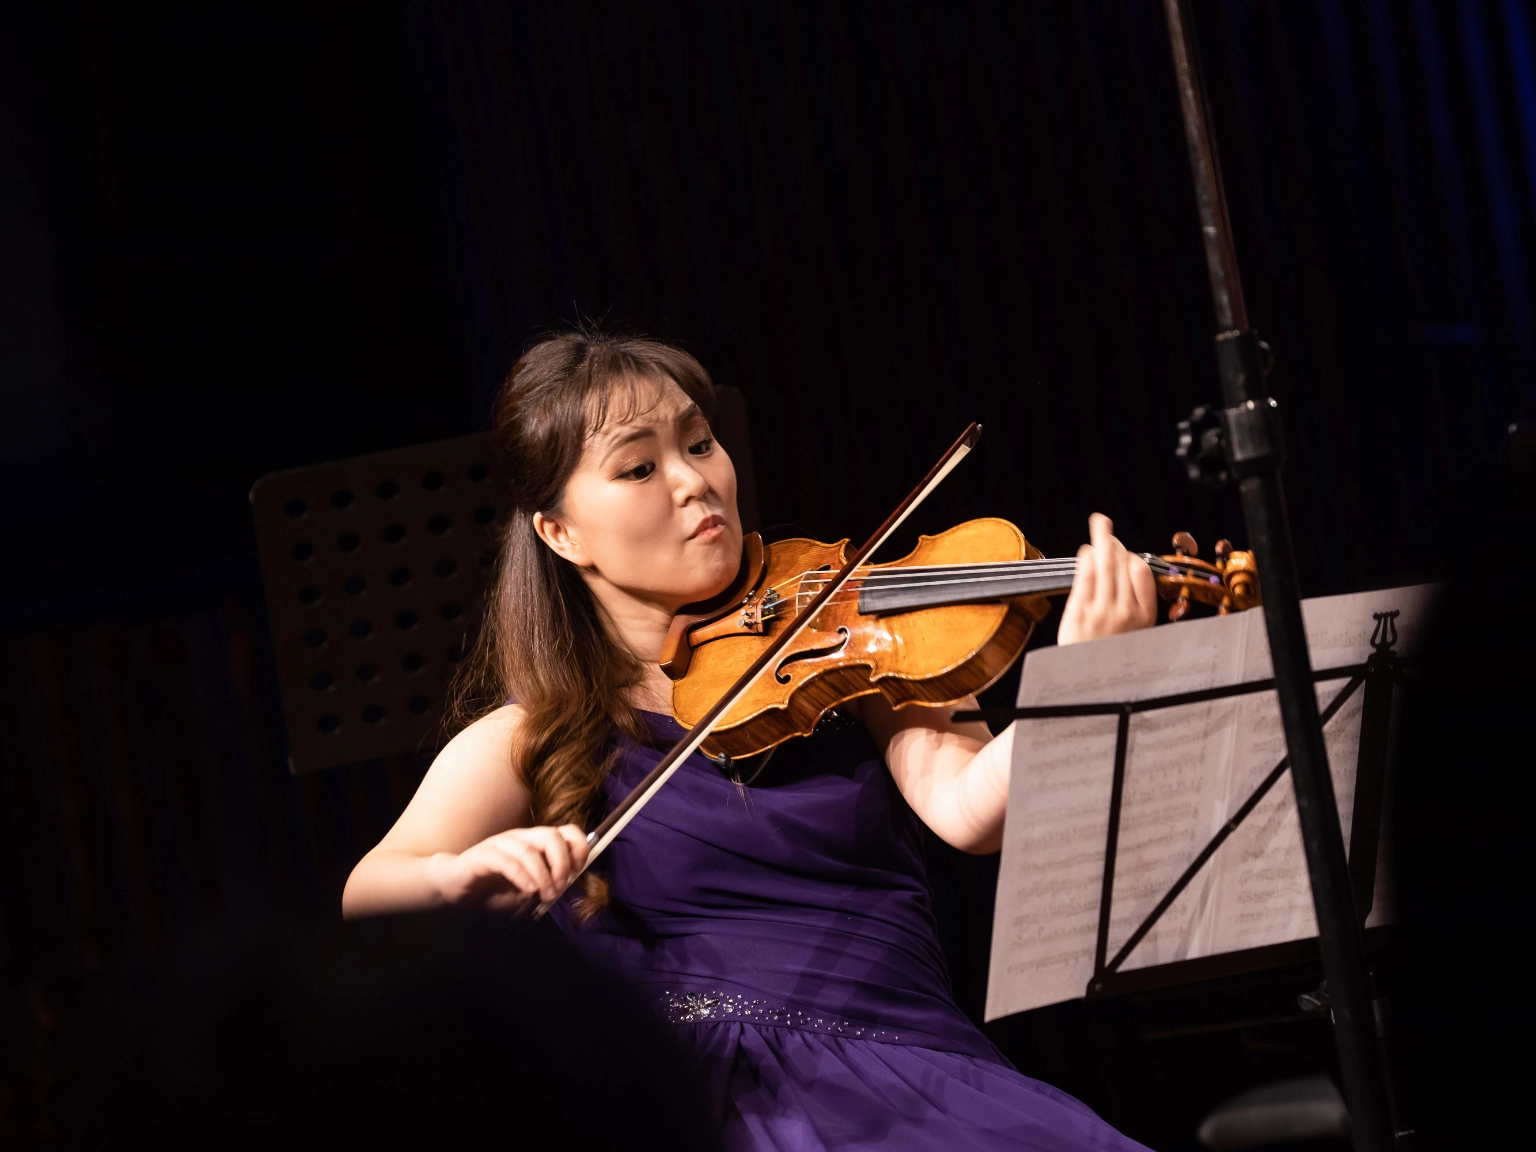 Joseph Joachim Violinwettbewerb 2021: Konzert Minami Yoshida, Semifinale II am 07.10.2021